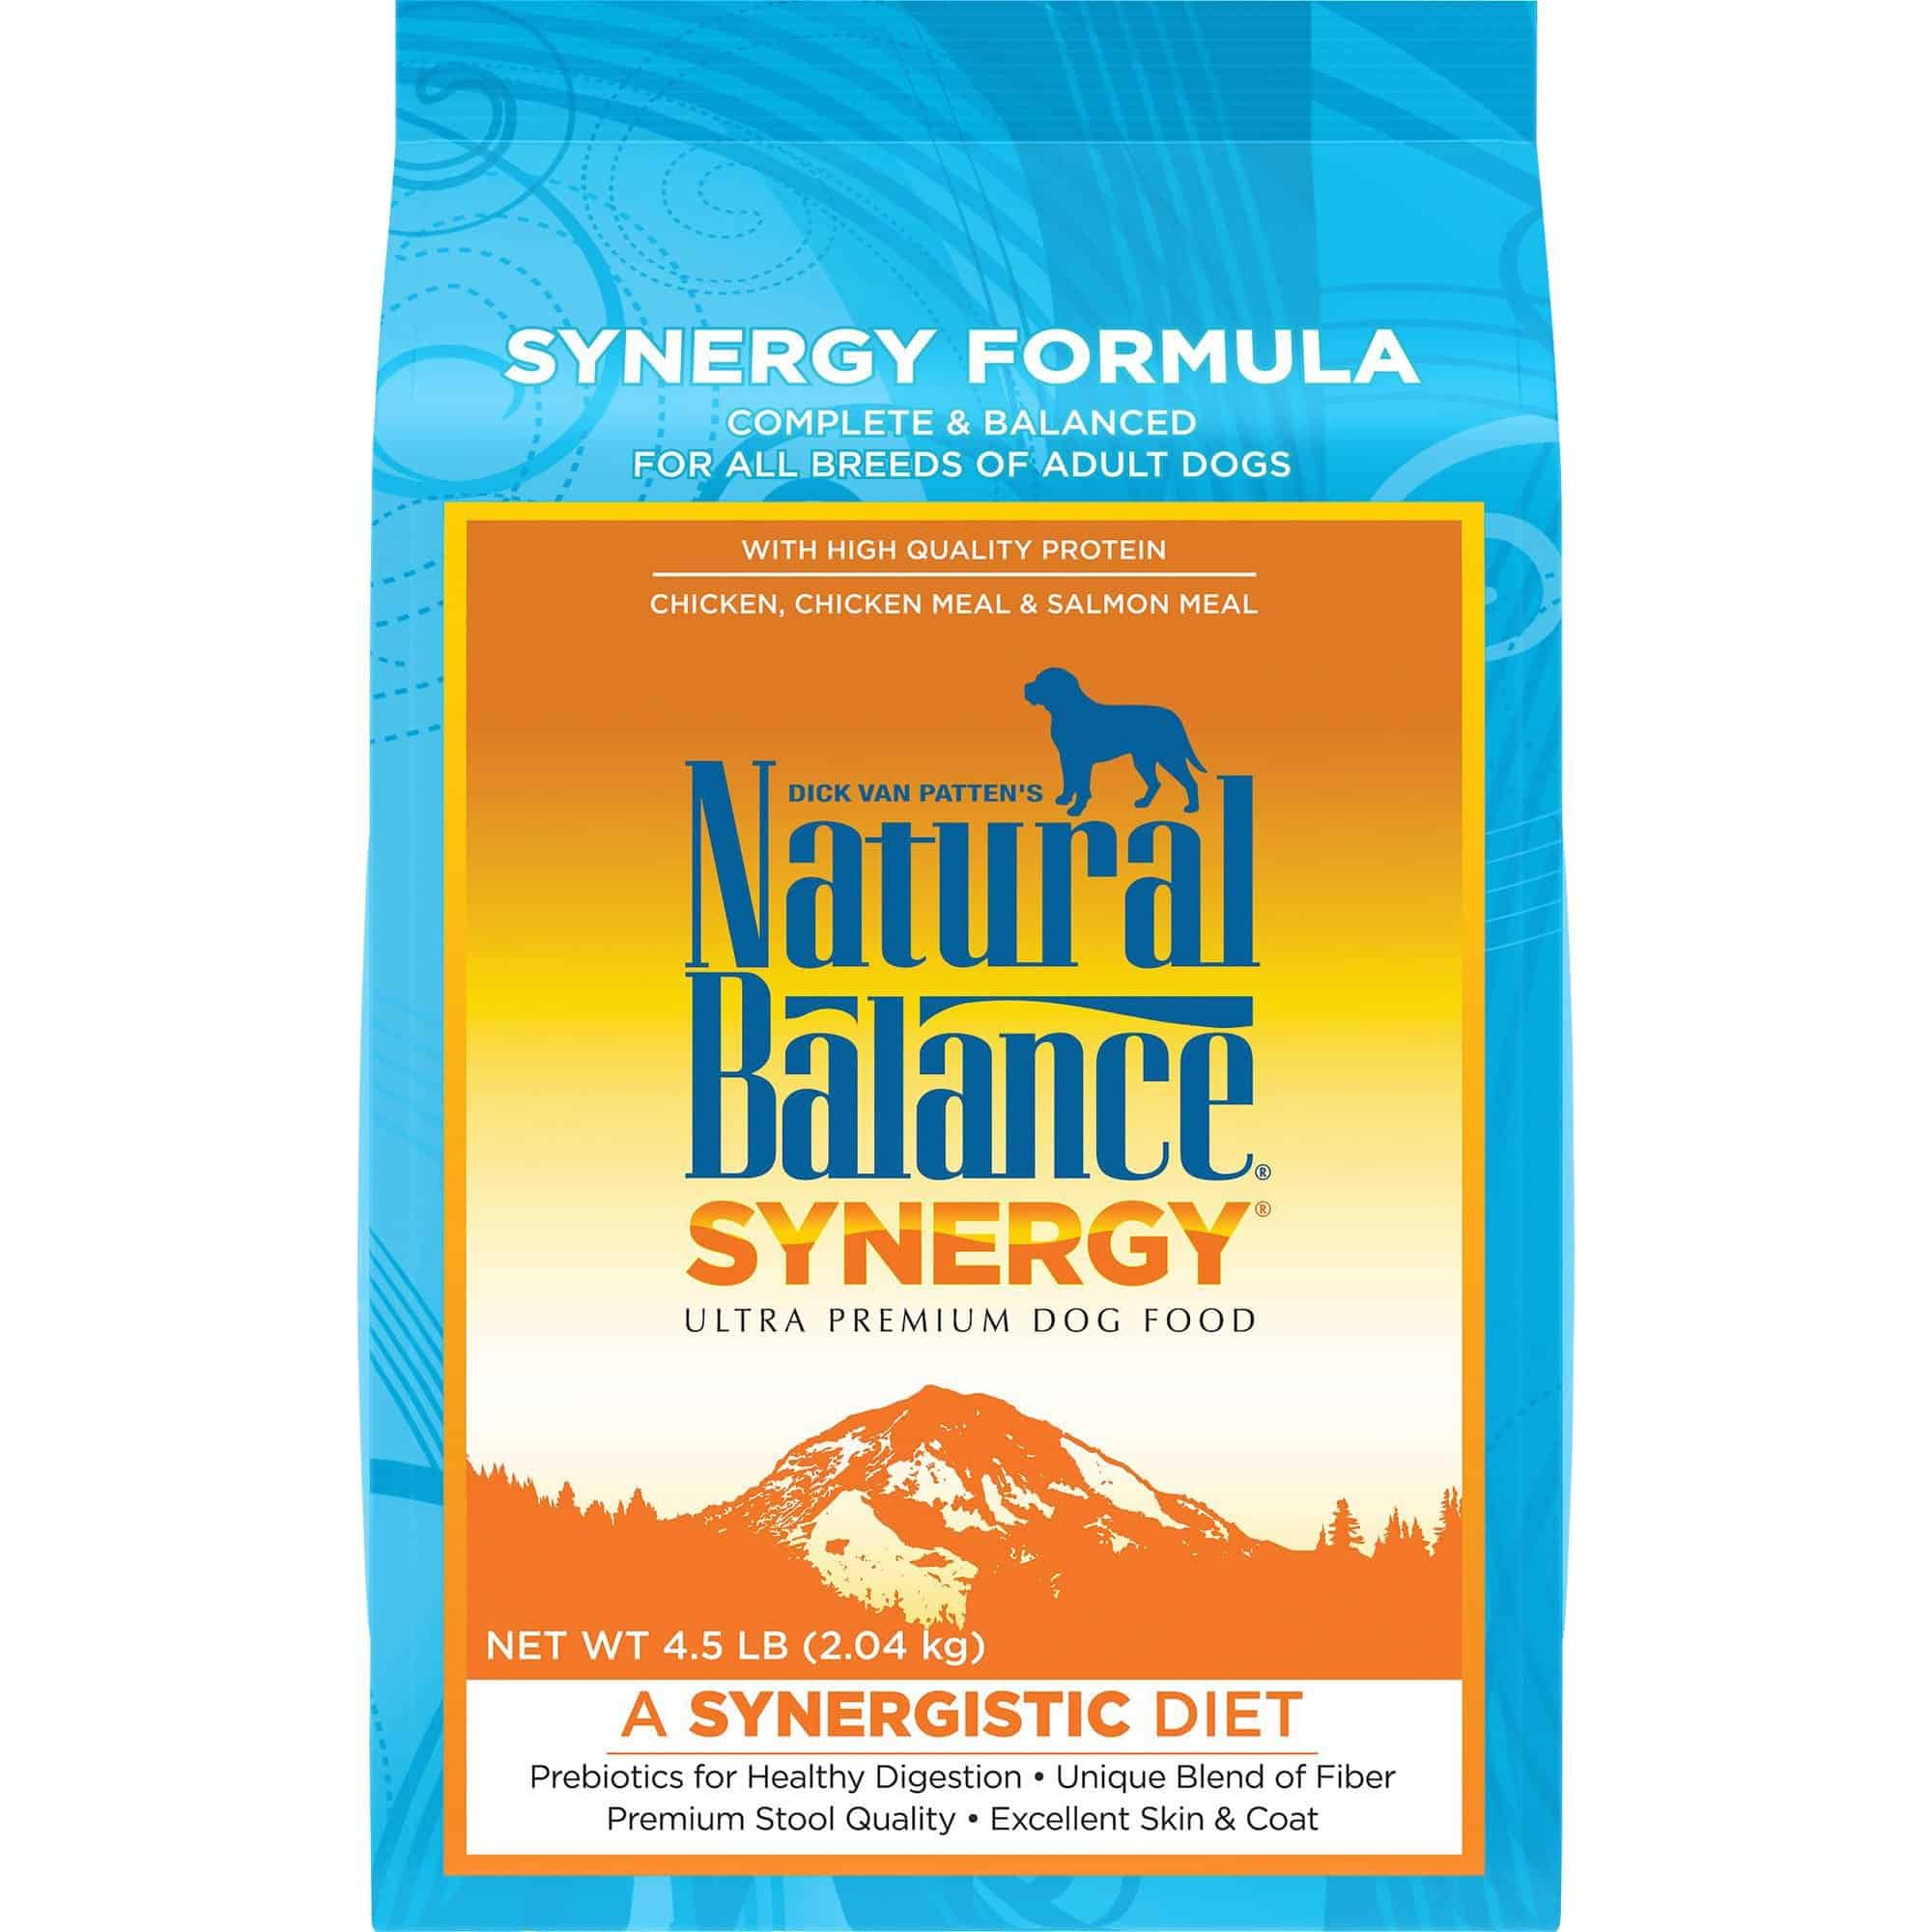 Natural Balance Synergy Ultra Premium Dog Food